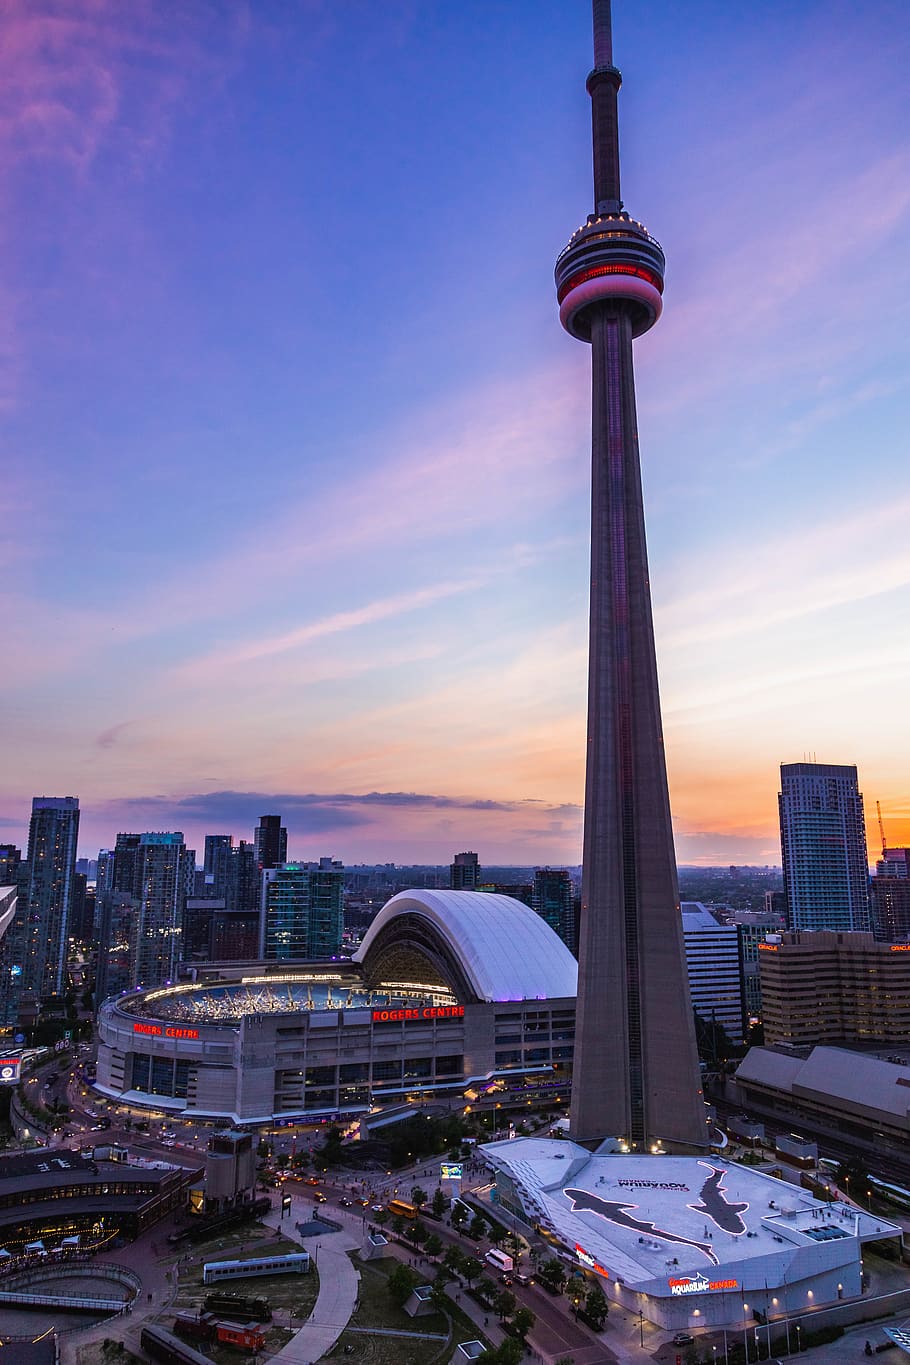 80 Free Cn Tower  Toronto Images  Pixabay